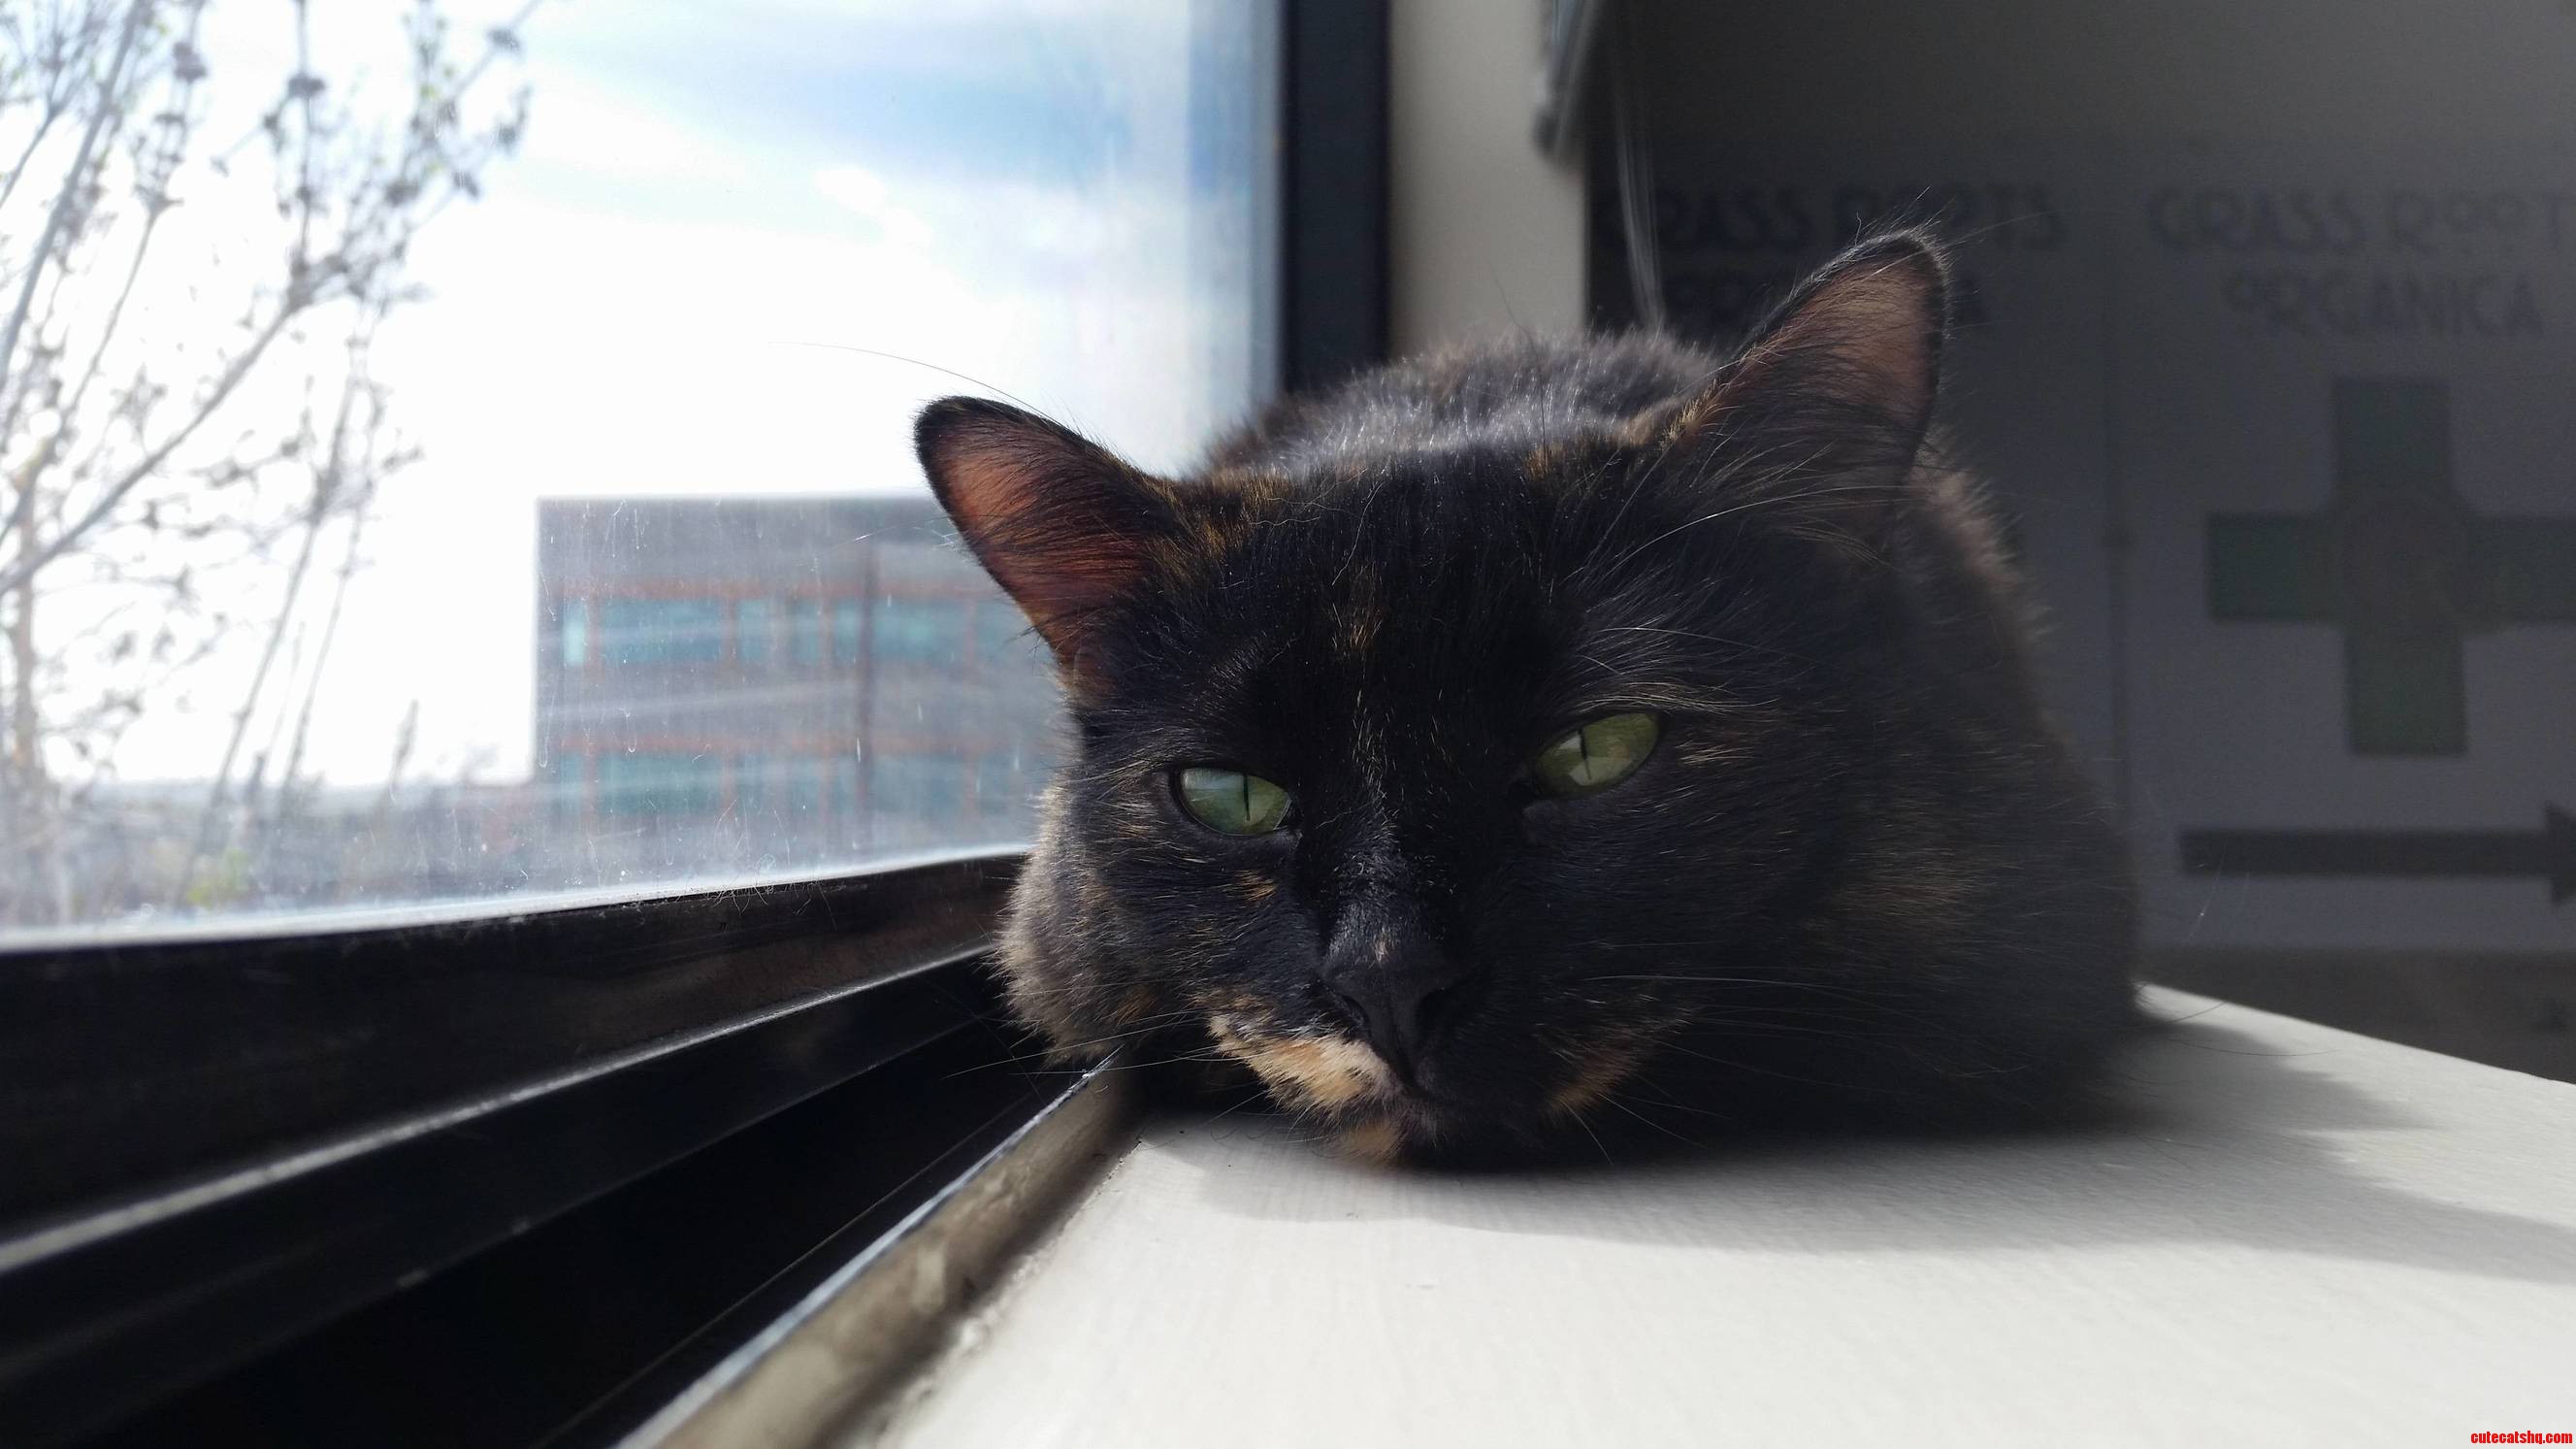 Sensi likes to sleep by the window